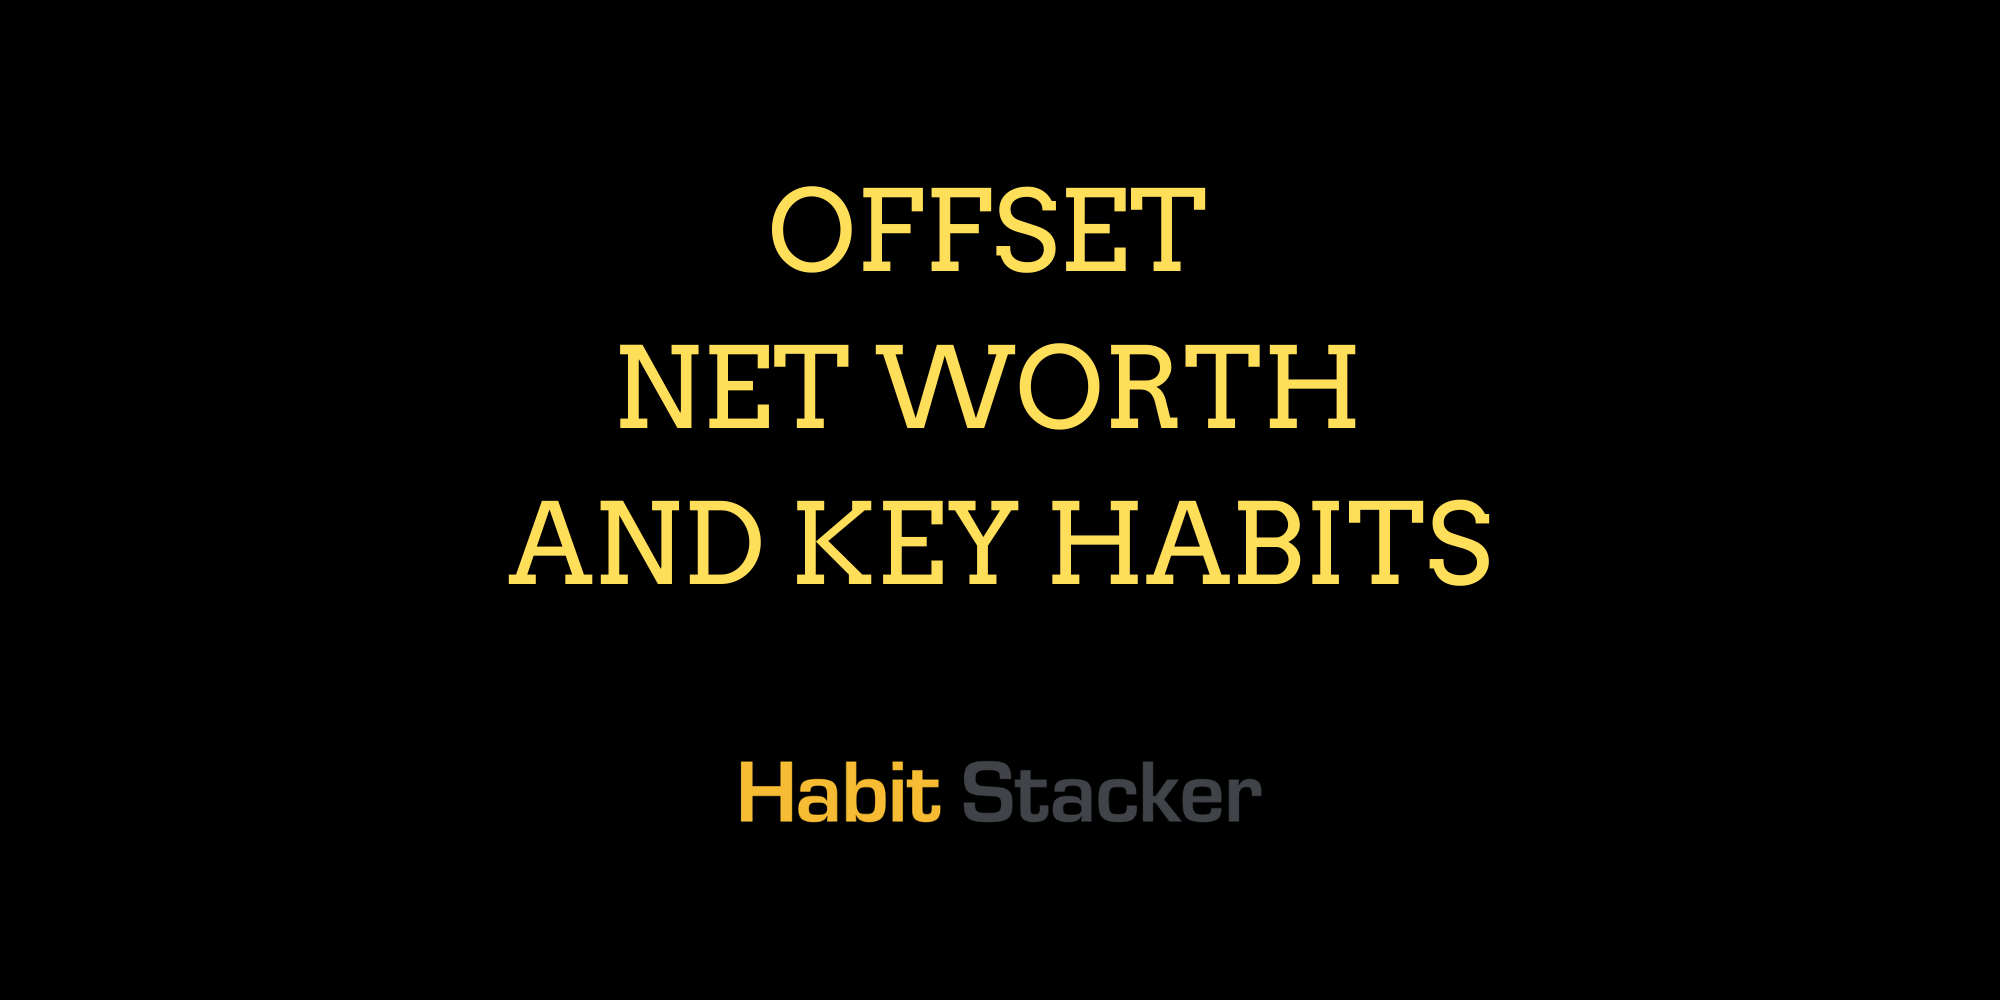 Offset Net Worth and Key Habits